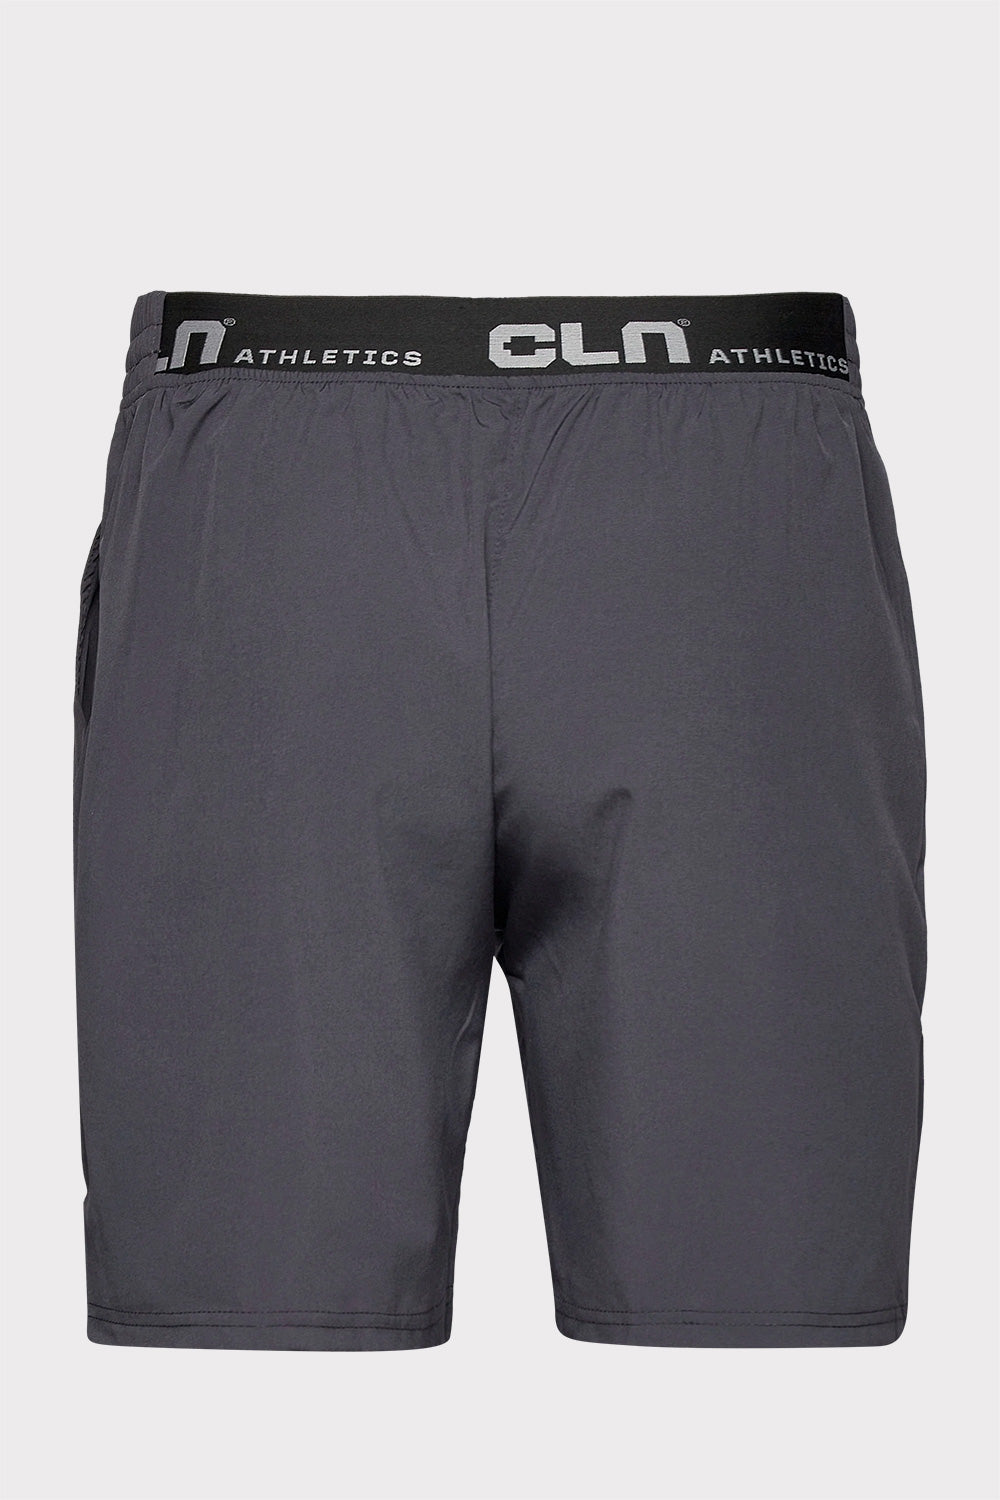 CLN Transform Shorts - Grafito  